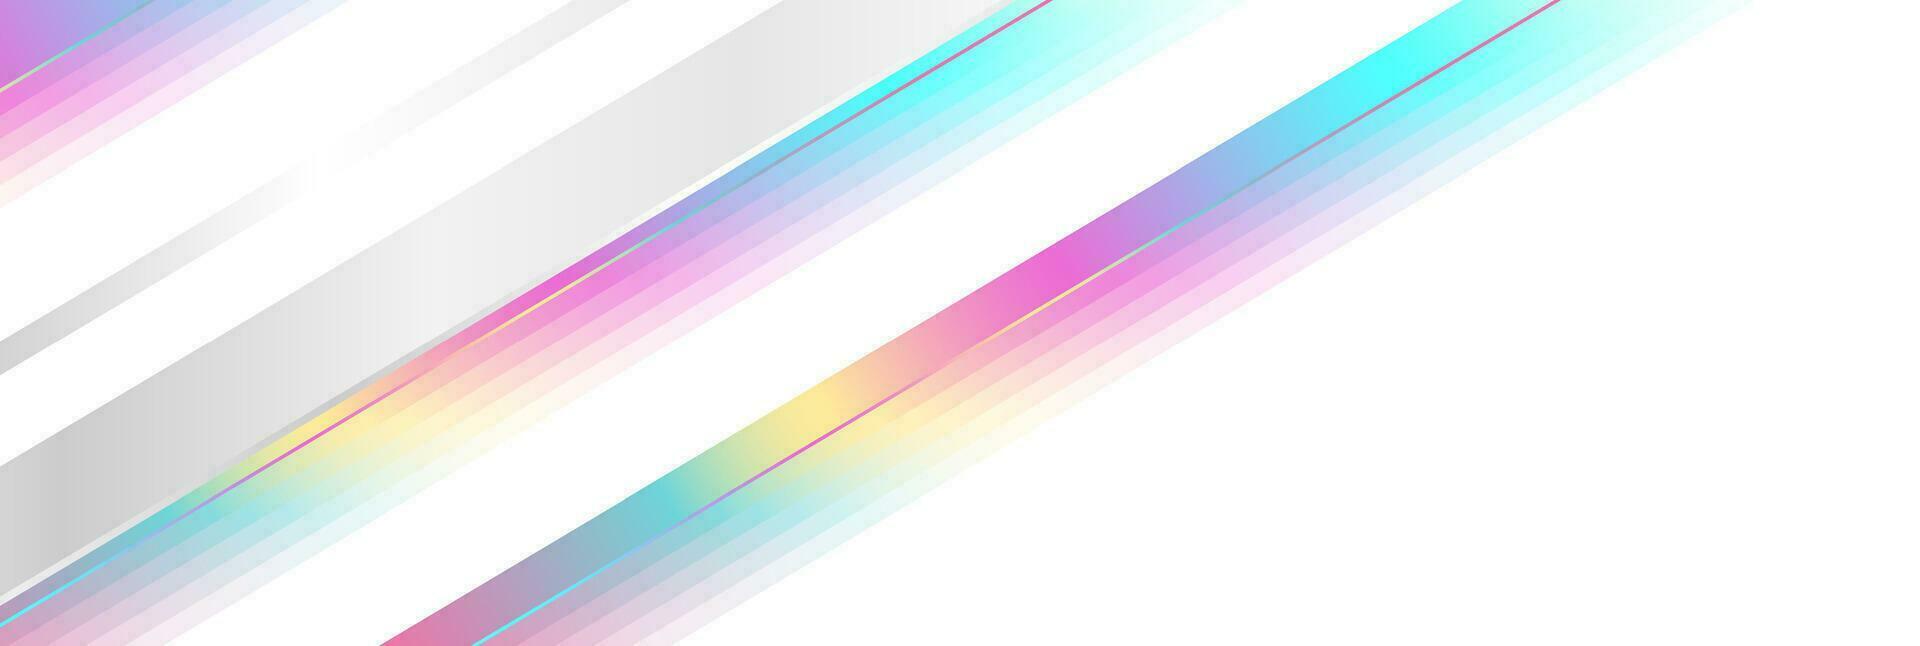 holografische glanzend strepen meetkundig abstract tech achtergrond vector